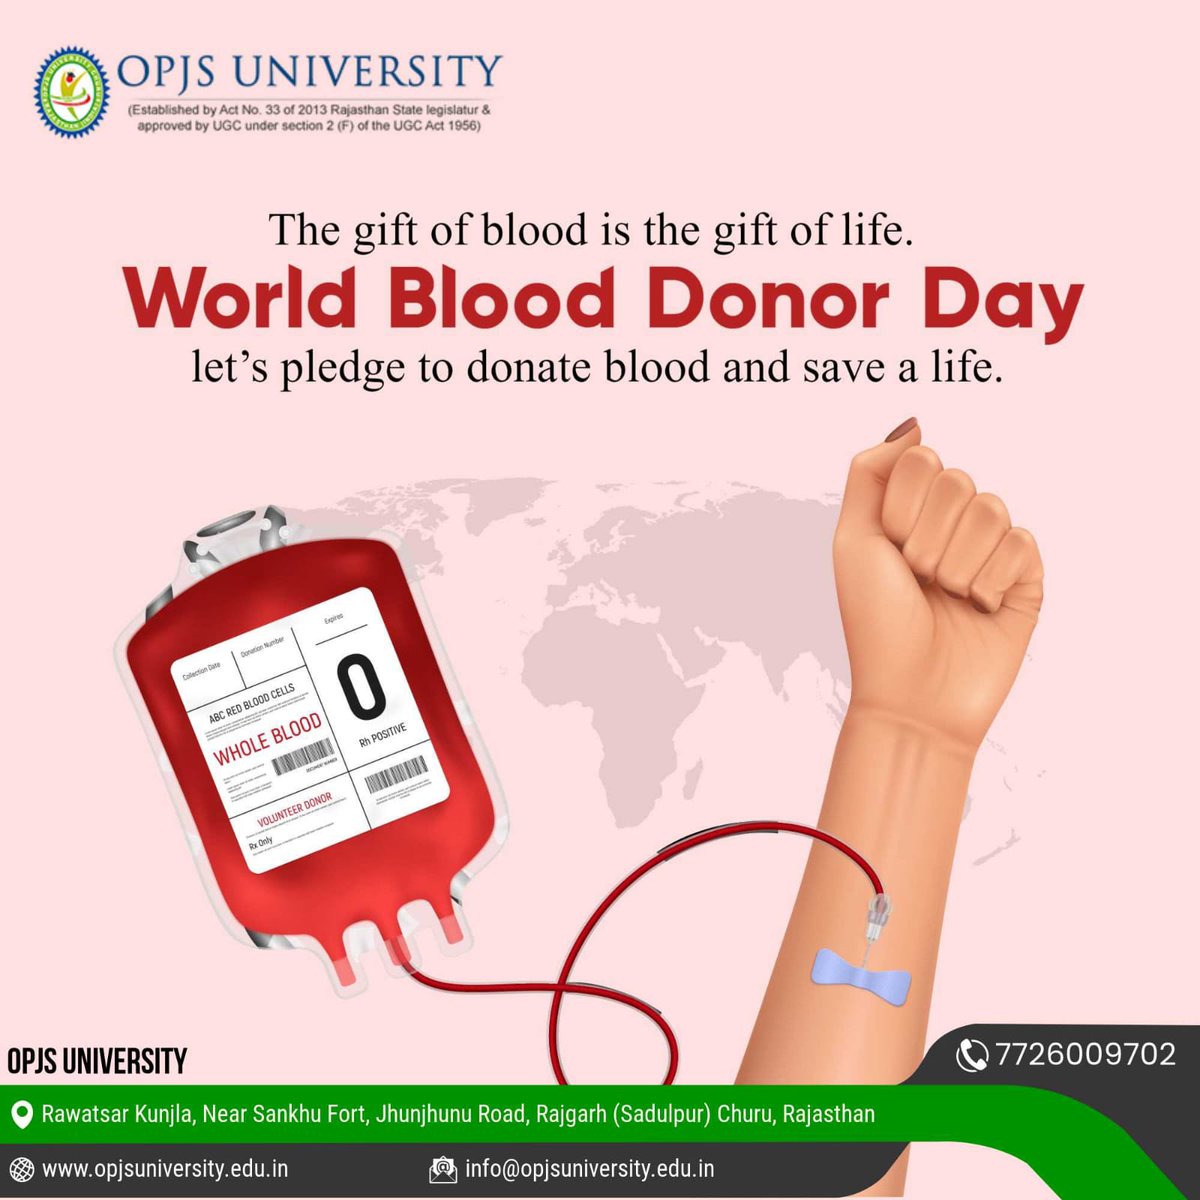 #SpreadAwareness #EveryDropCounts #BeAHero #ShareYourBlood #ProudBloodDonor #DonateBlood #BloodDonorHero #GiveBloodSaveLives #BloodDonationCampaign #LifeSaver